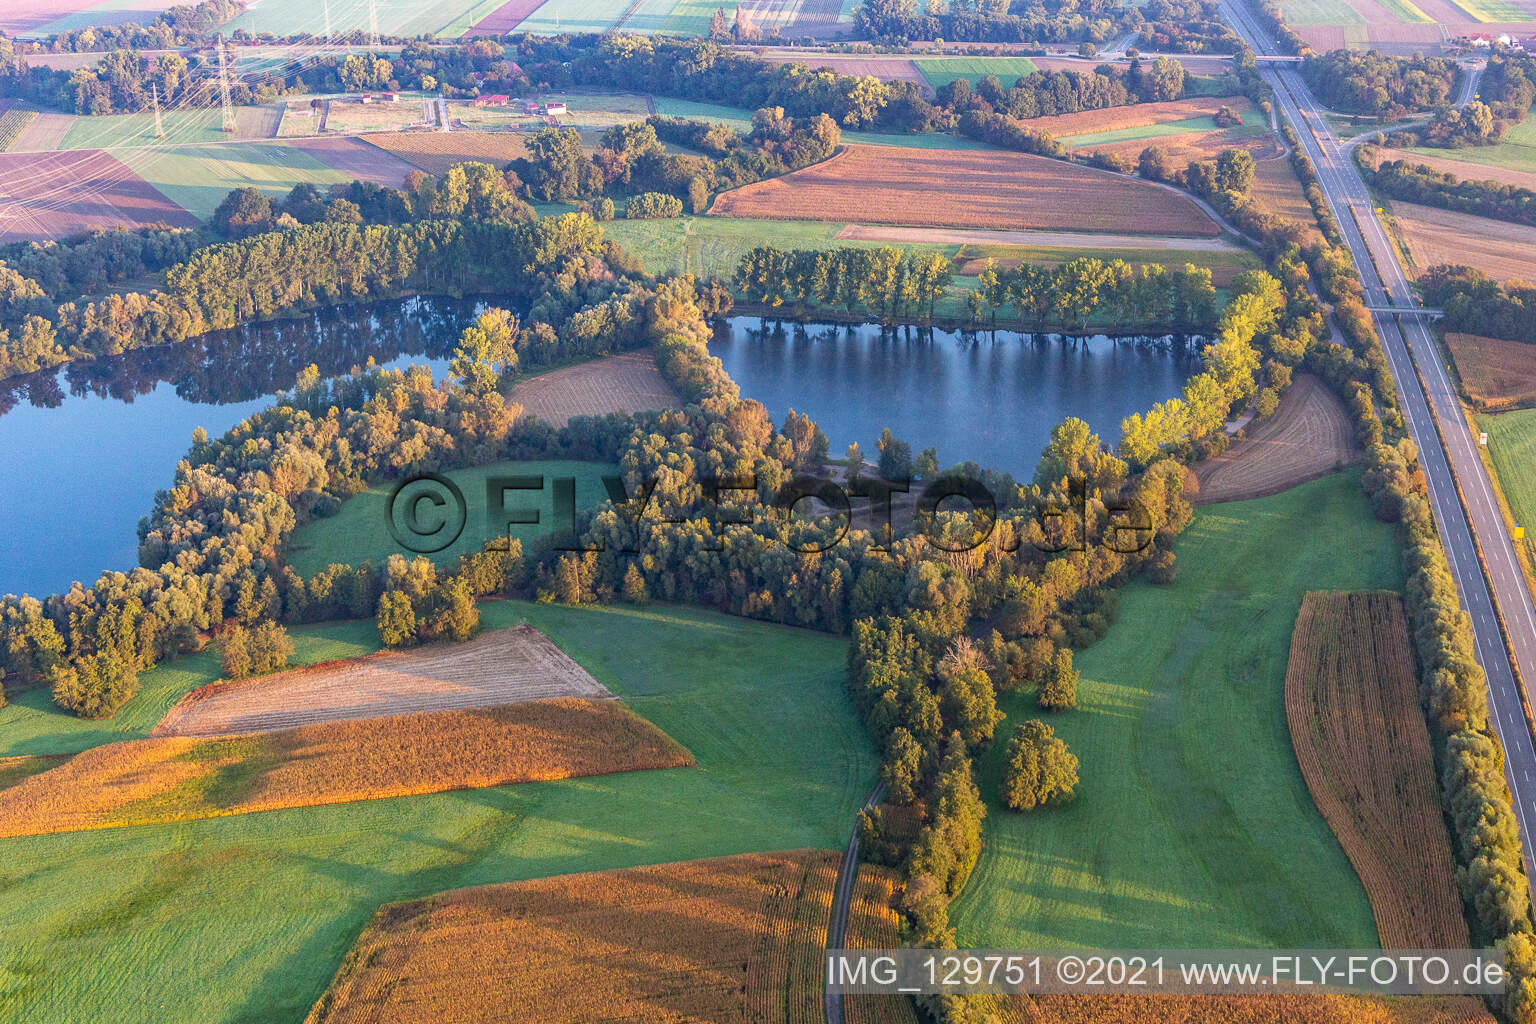 Rheinzabern in the state Rhineland-Palatinate, Germany viewn from the air